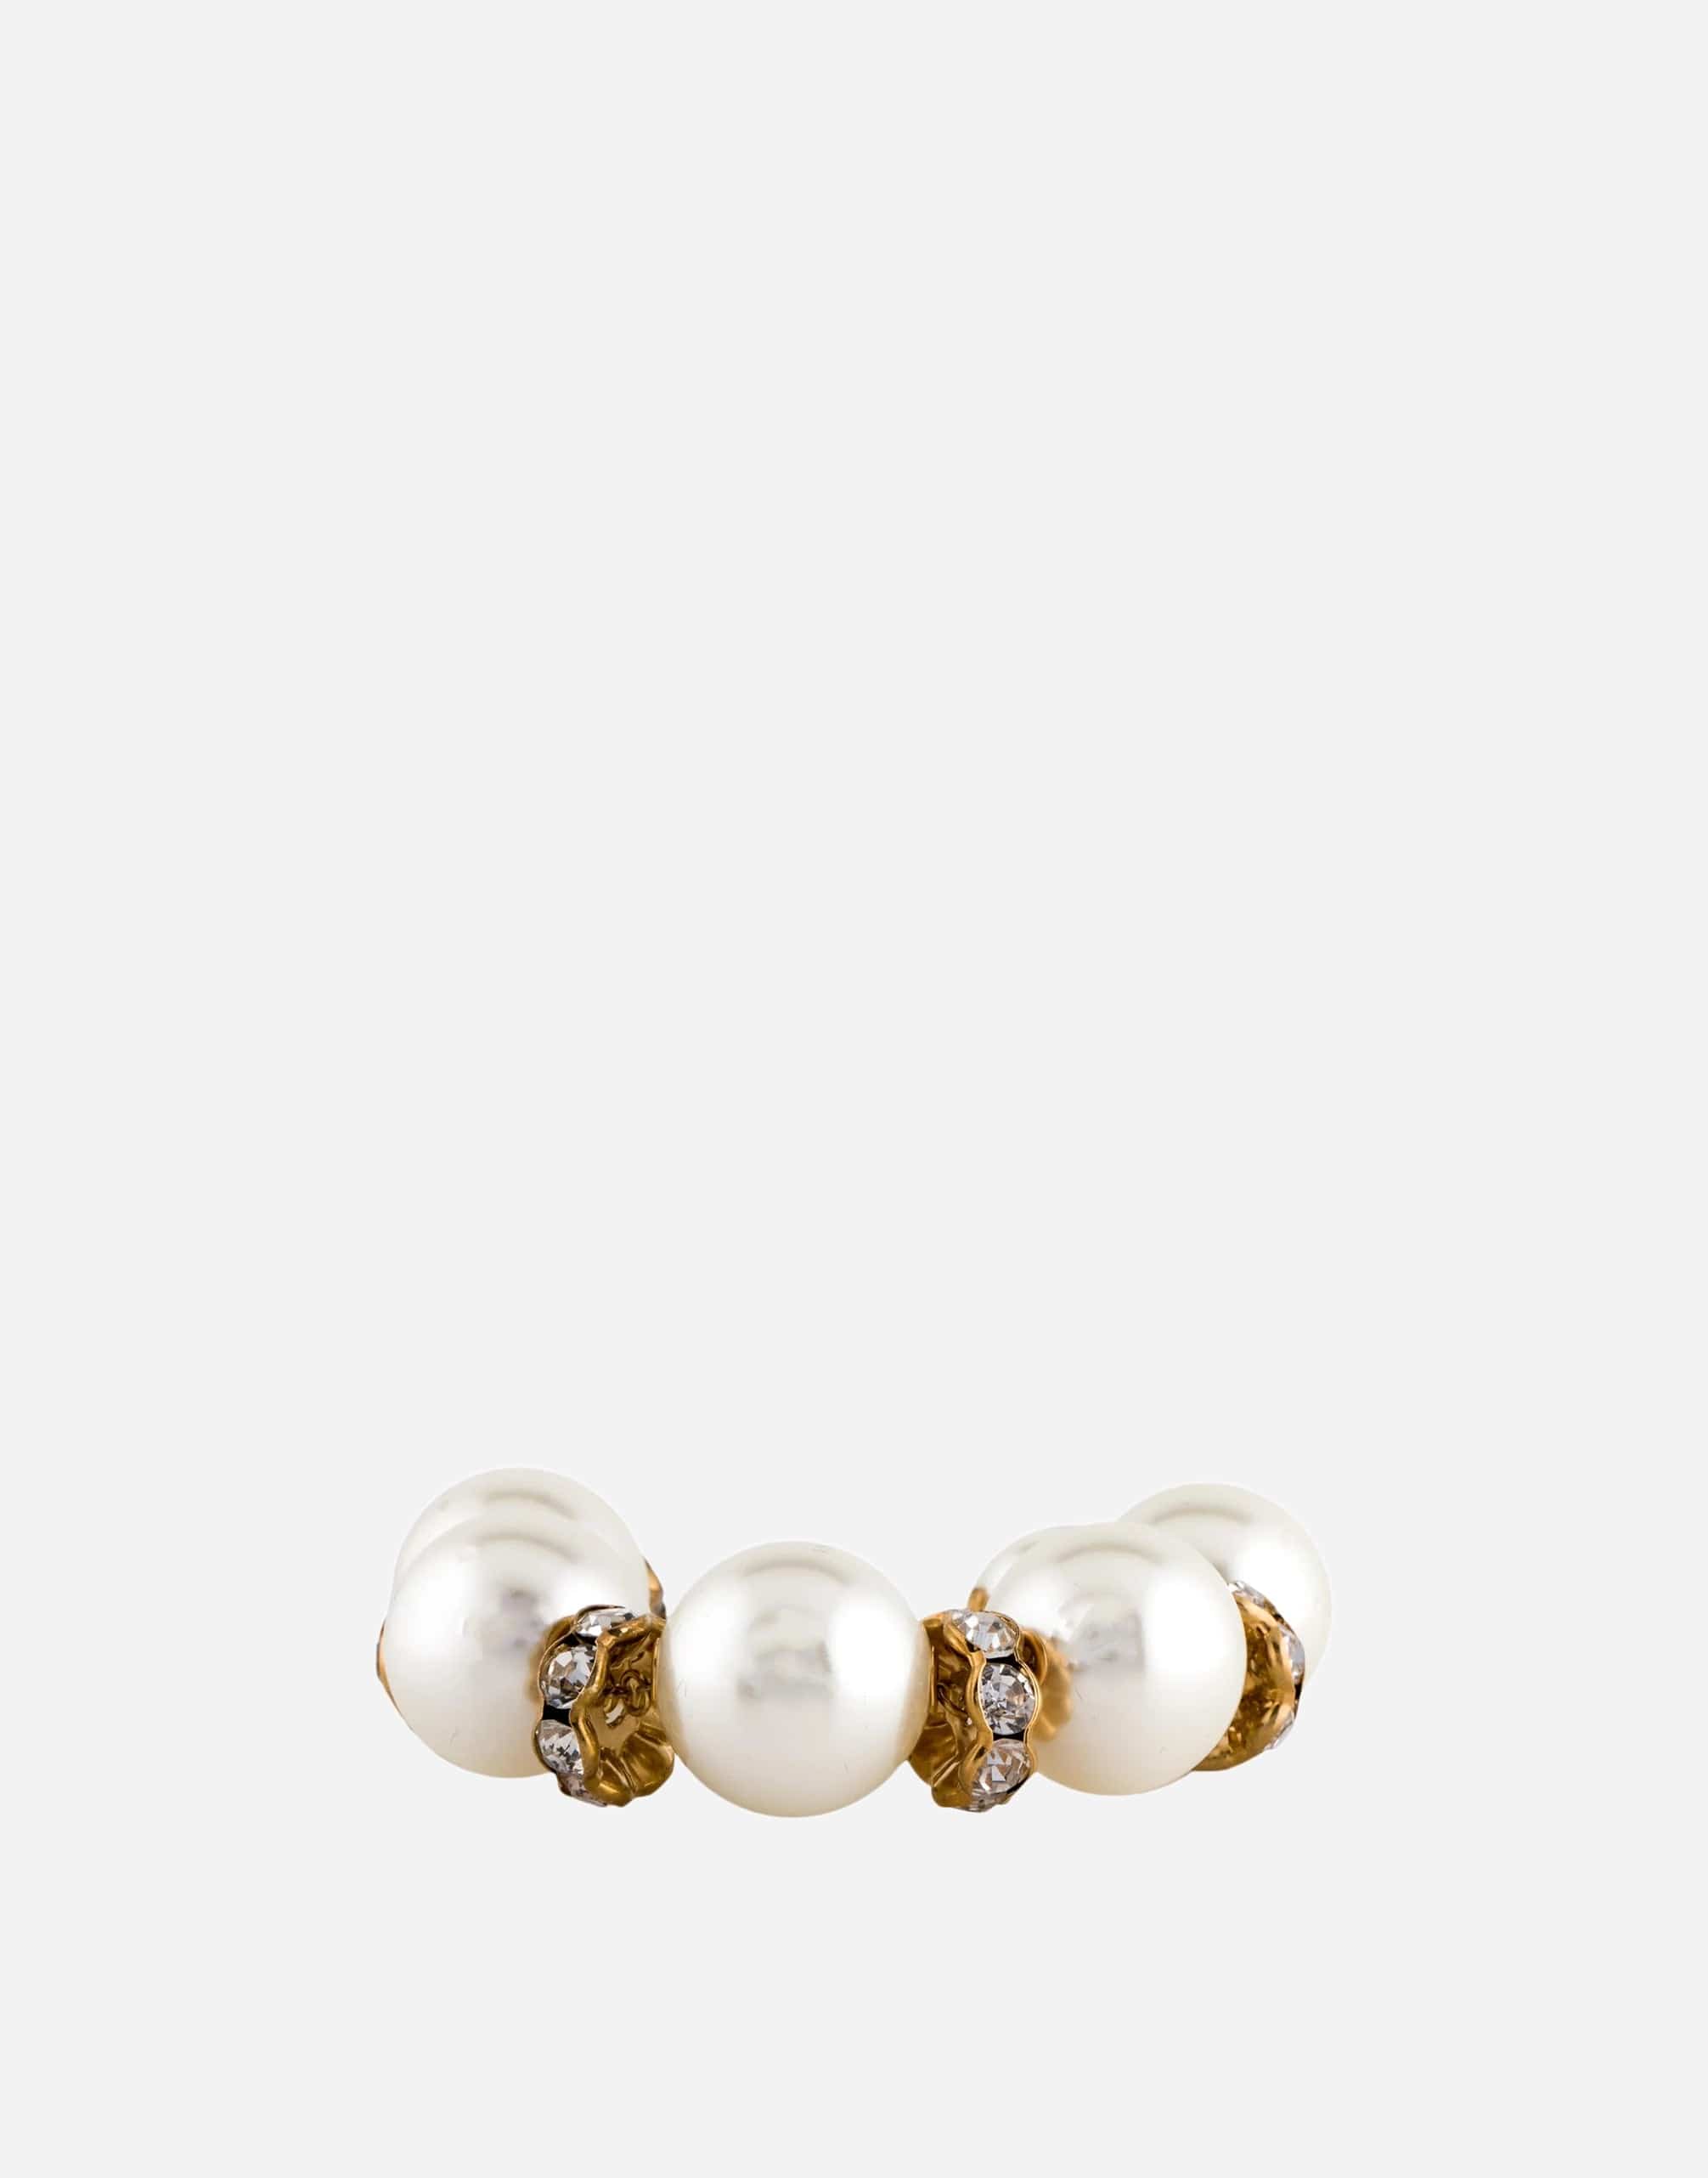 Dolce & Gabbana Maxi Pearl Embellished Bracelet